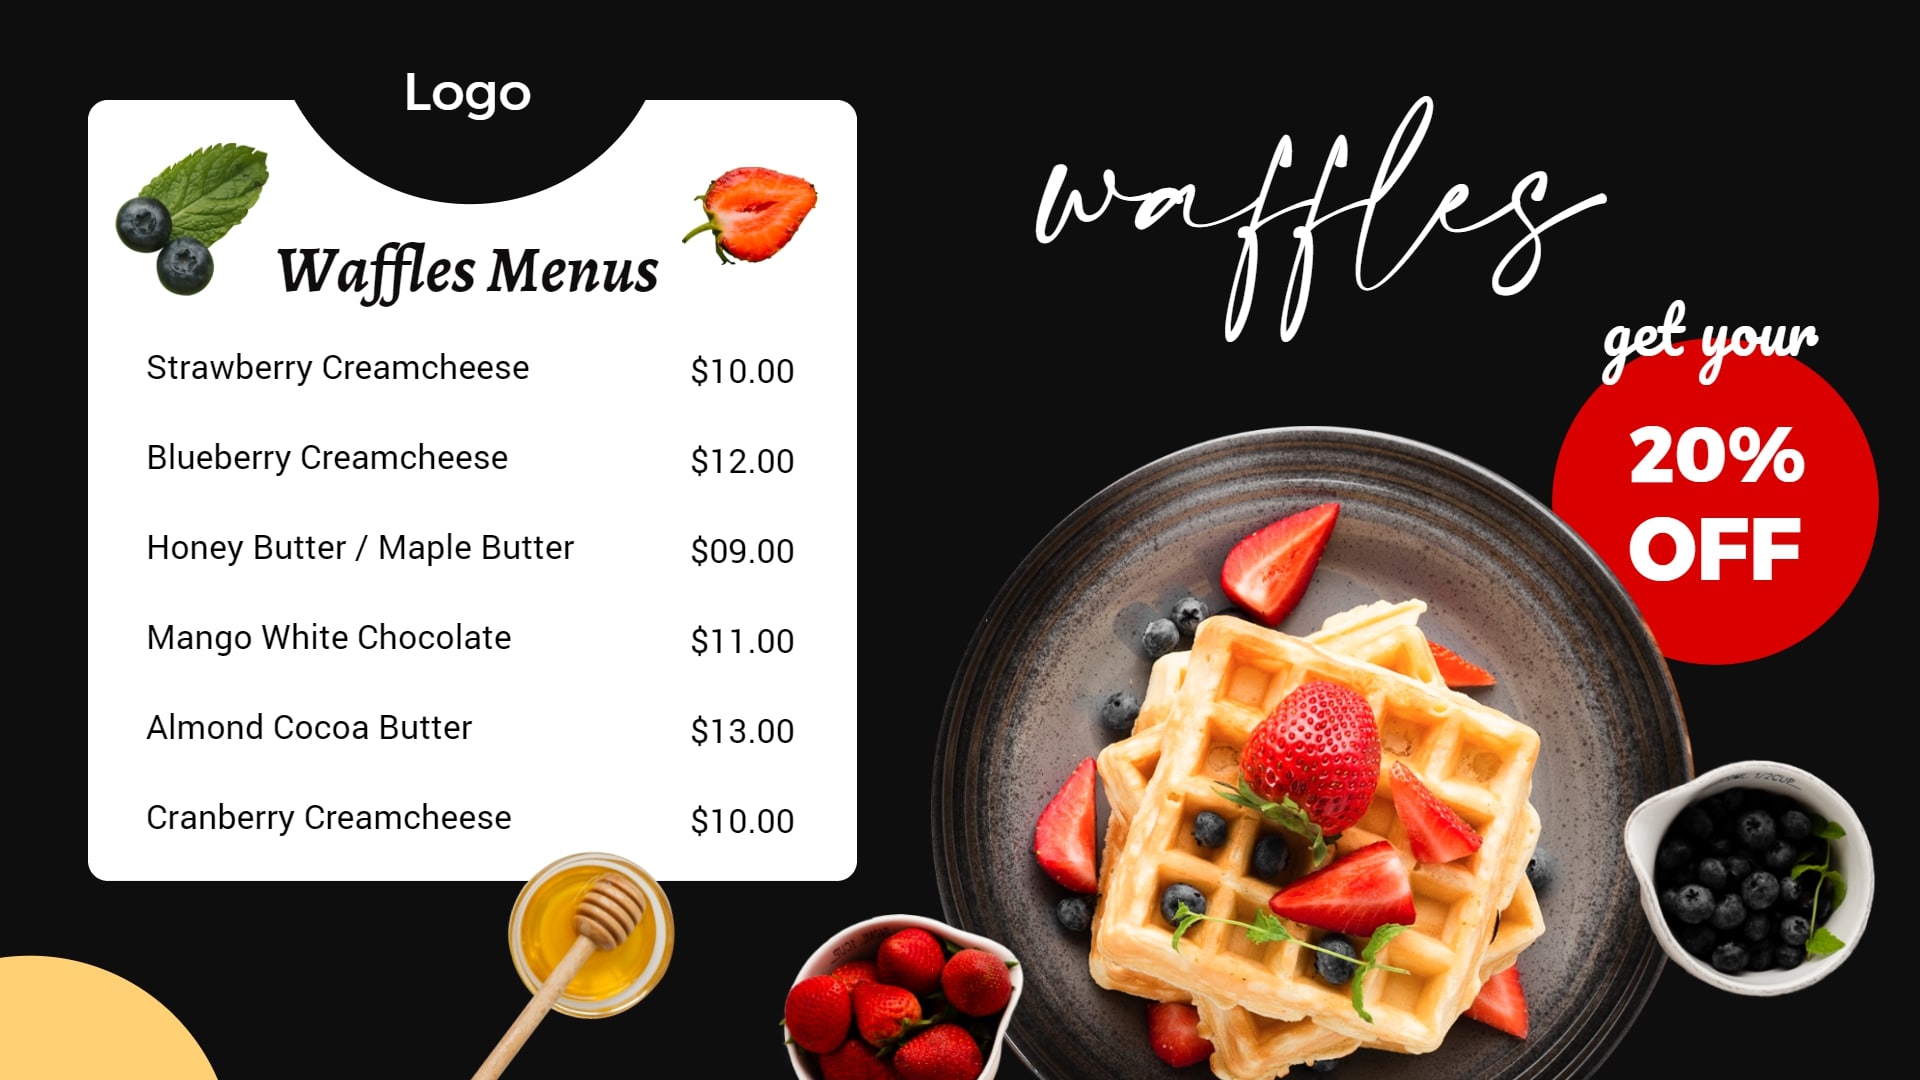 waffle menu boards offer promotion